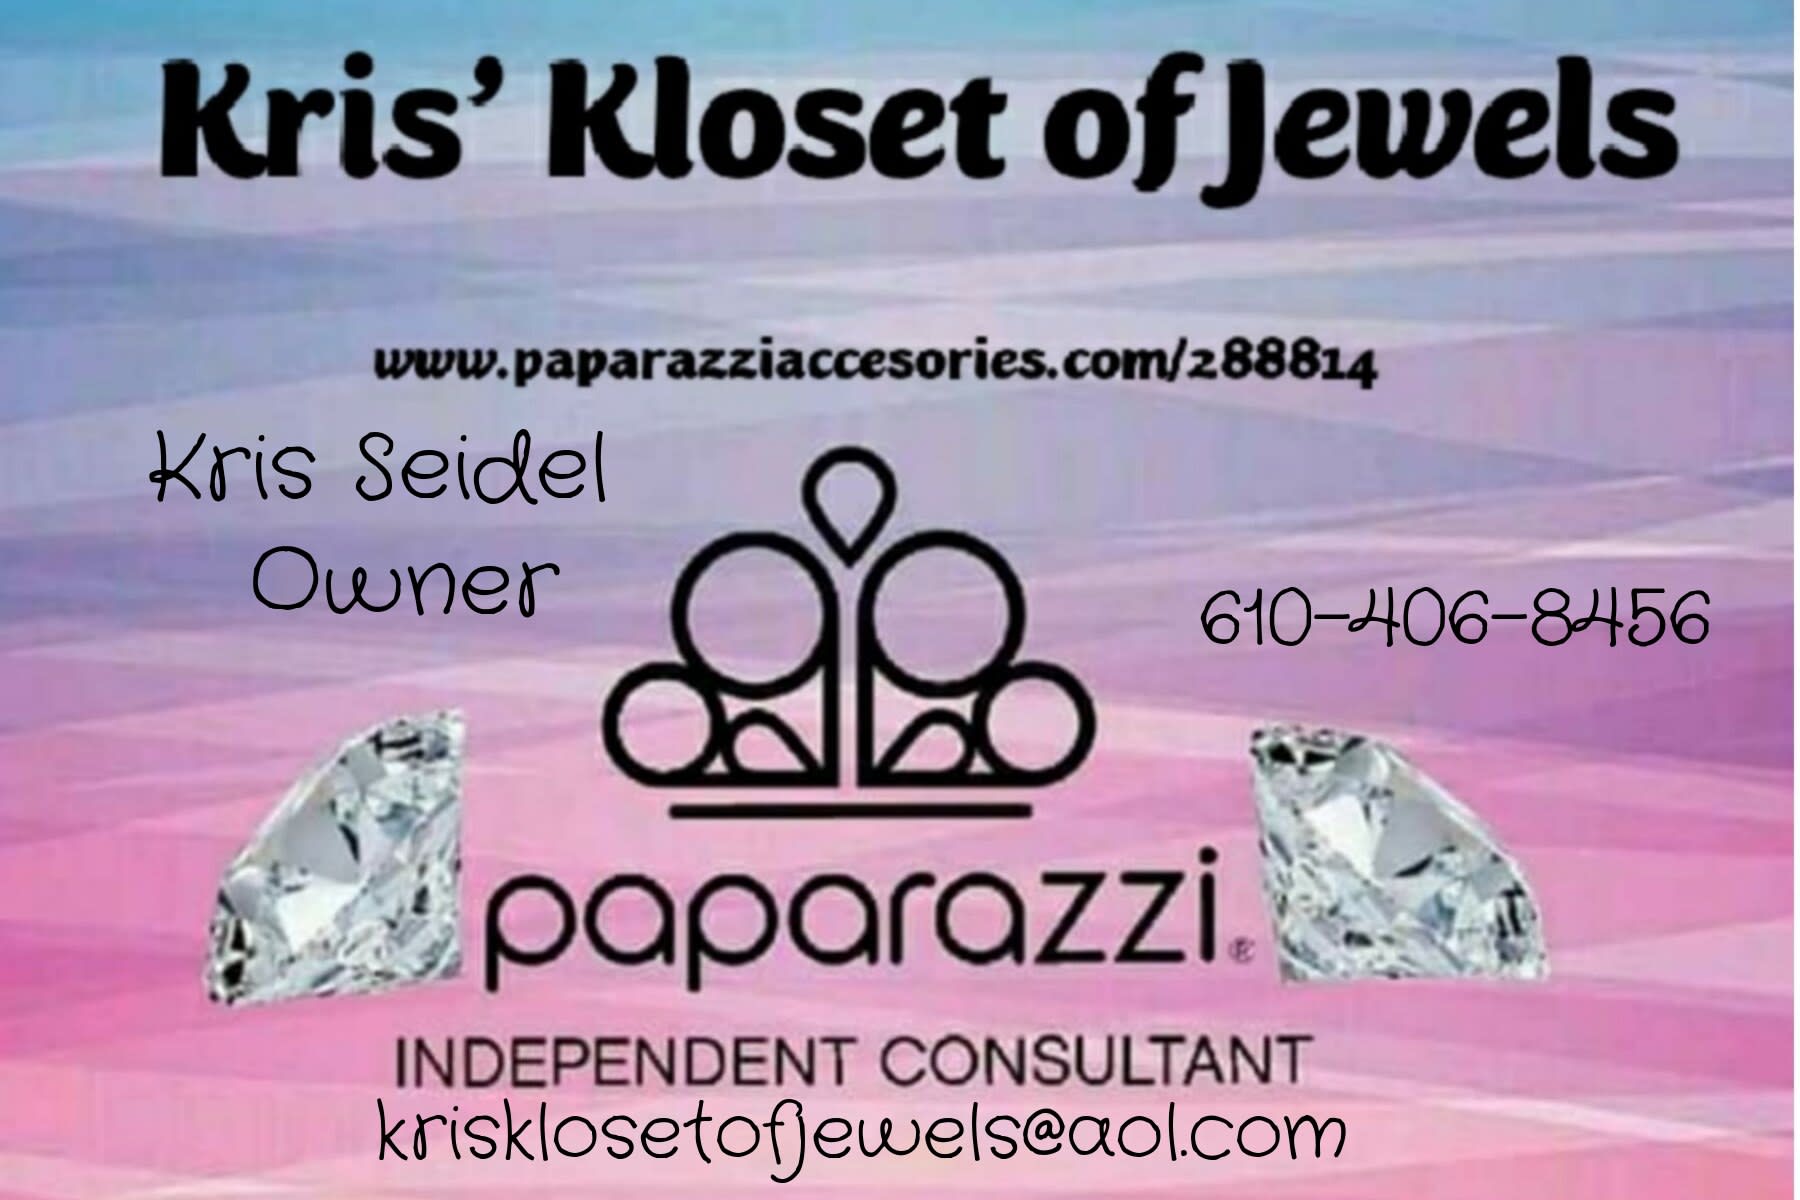 Kris' Kloset of Jewels